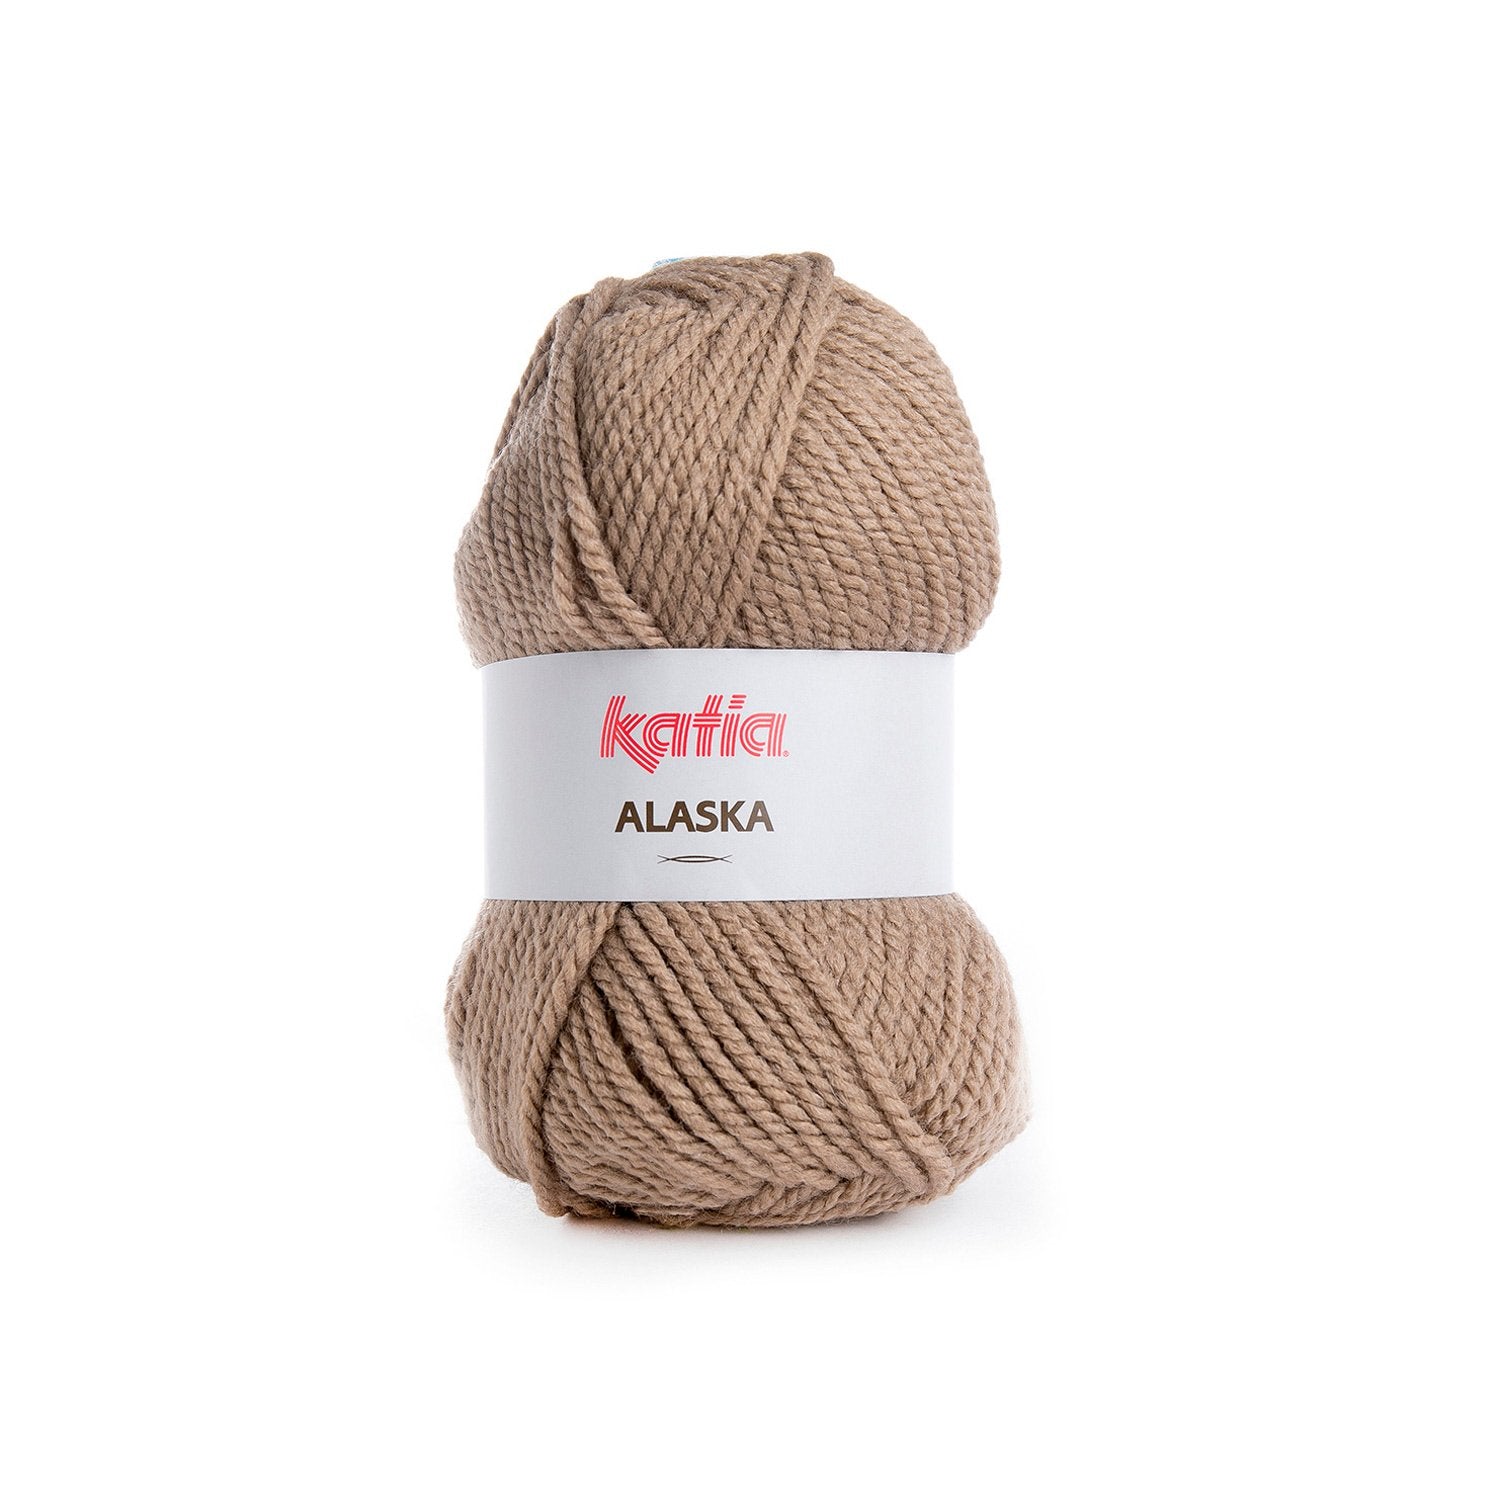 Katia Alaska Wool: thick and soft yarn for winter fabrics